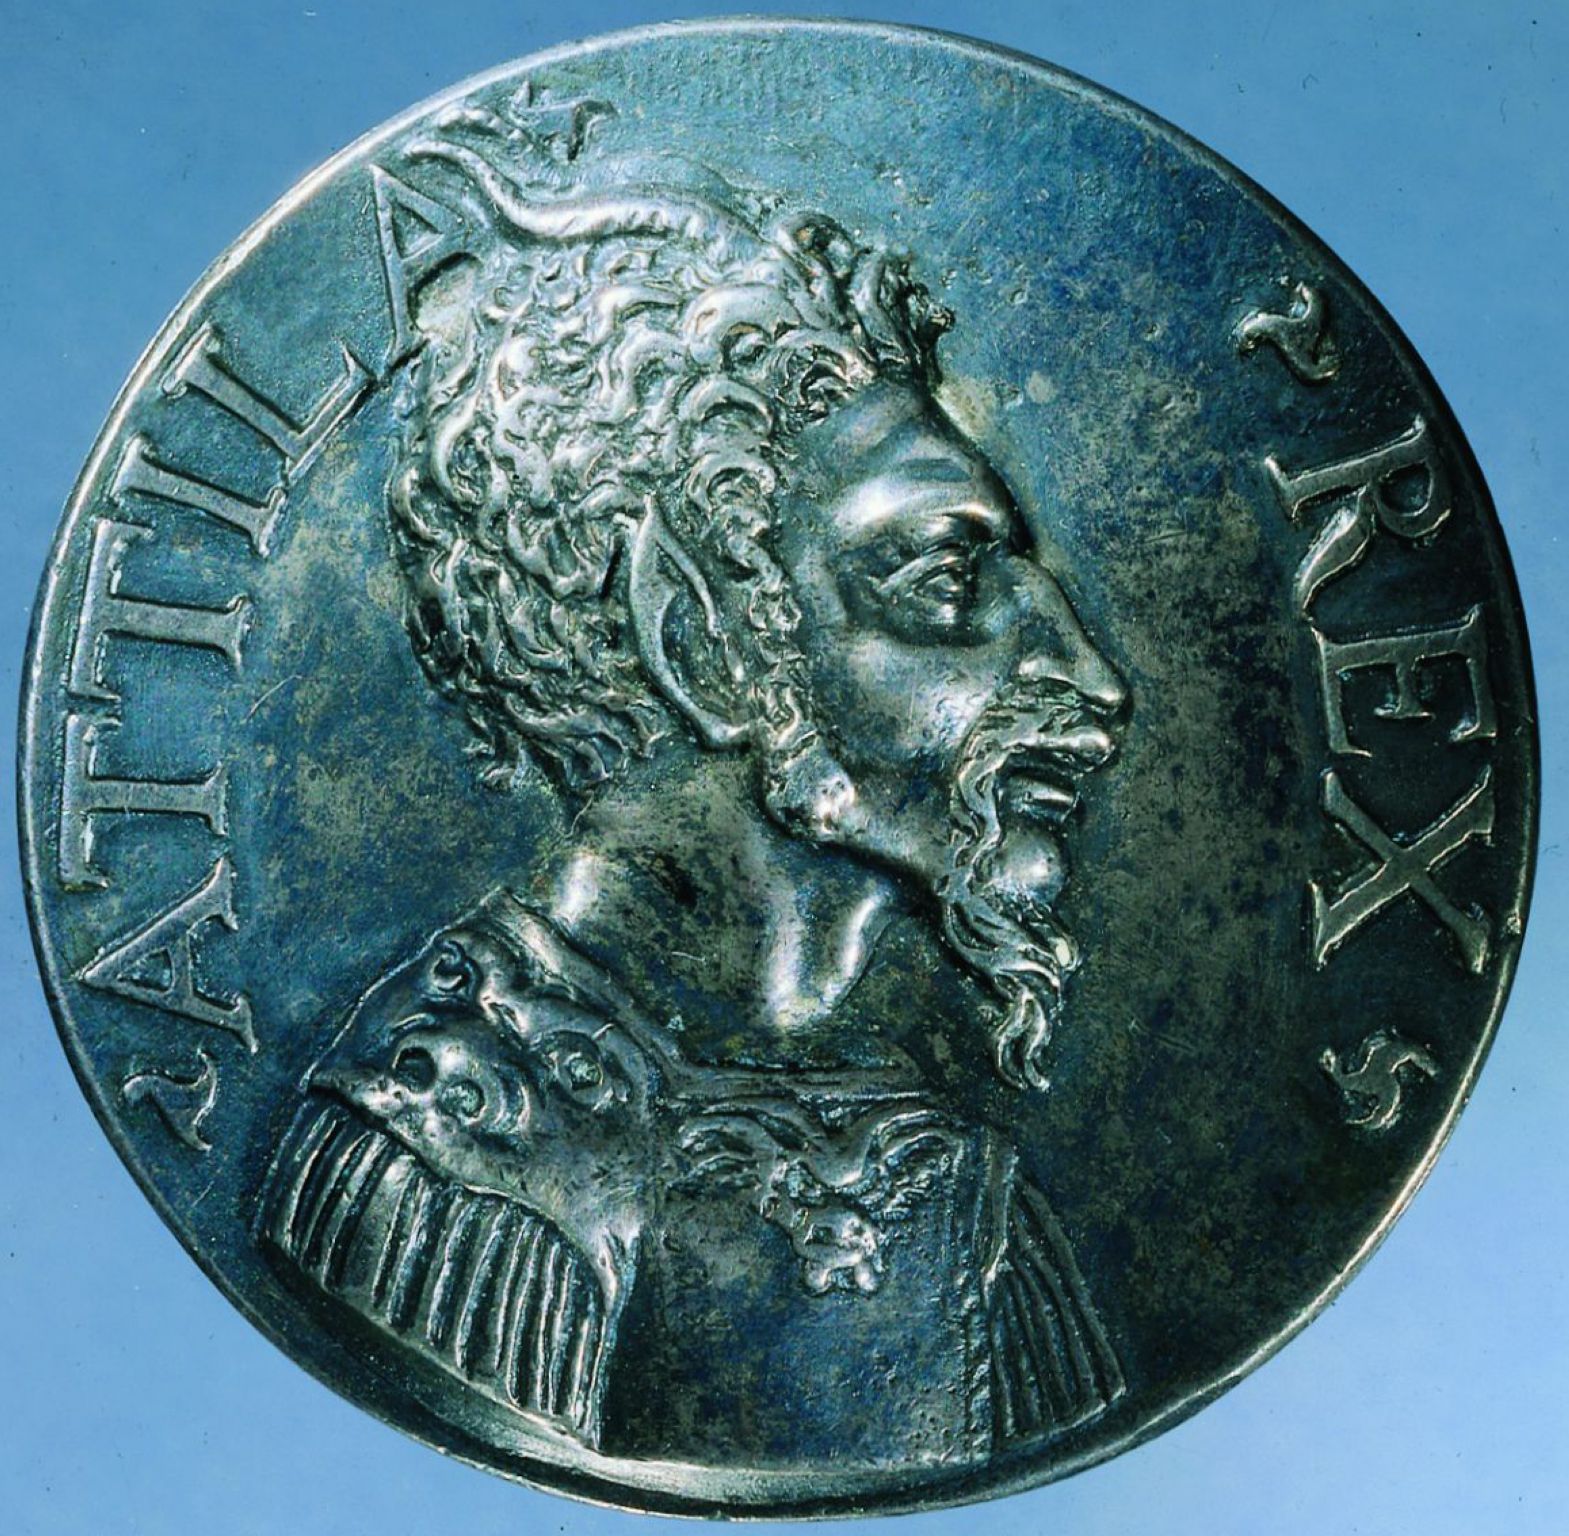 Attila, roi des Huns (434-453), médaille italienne du XVIe siècle